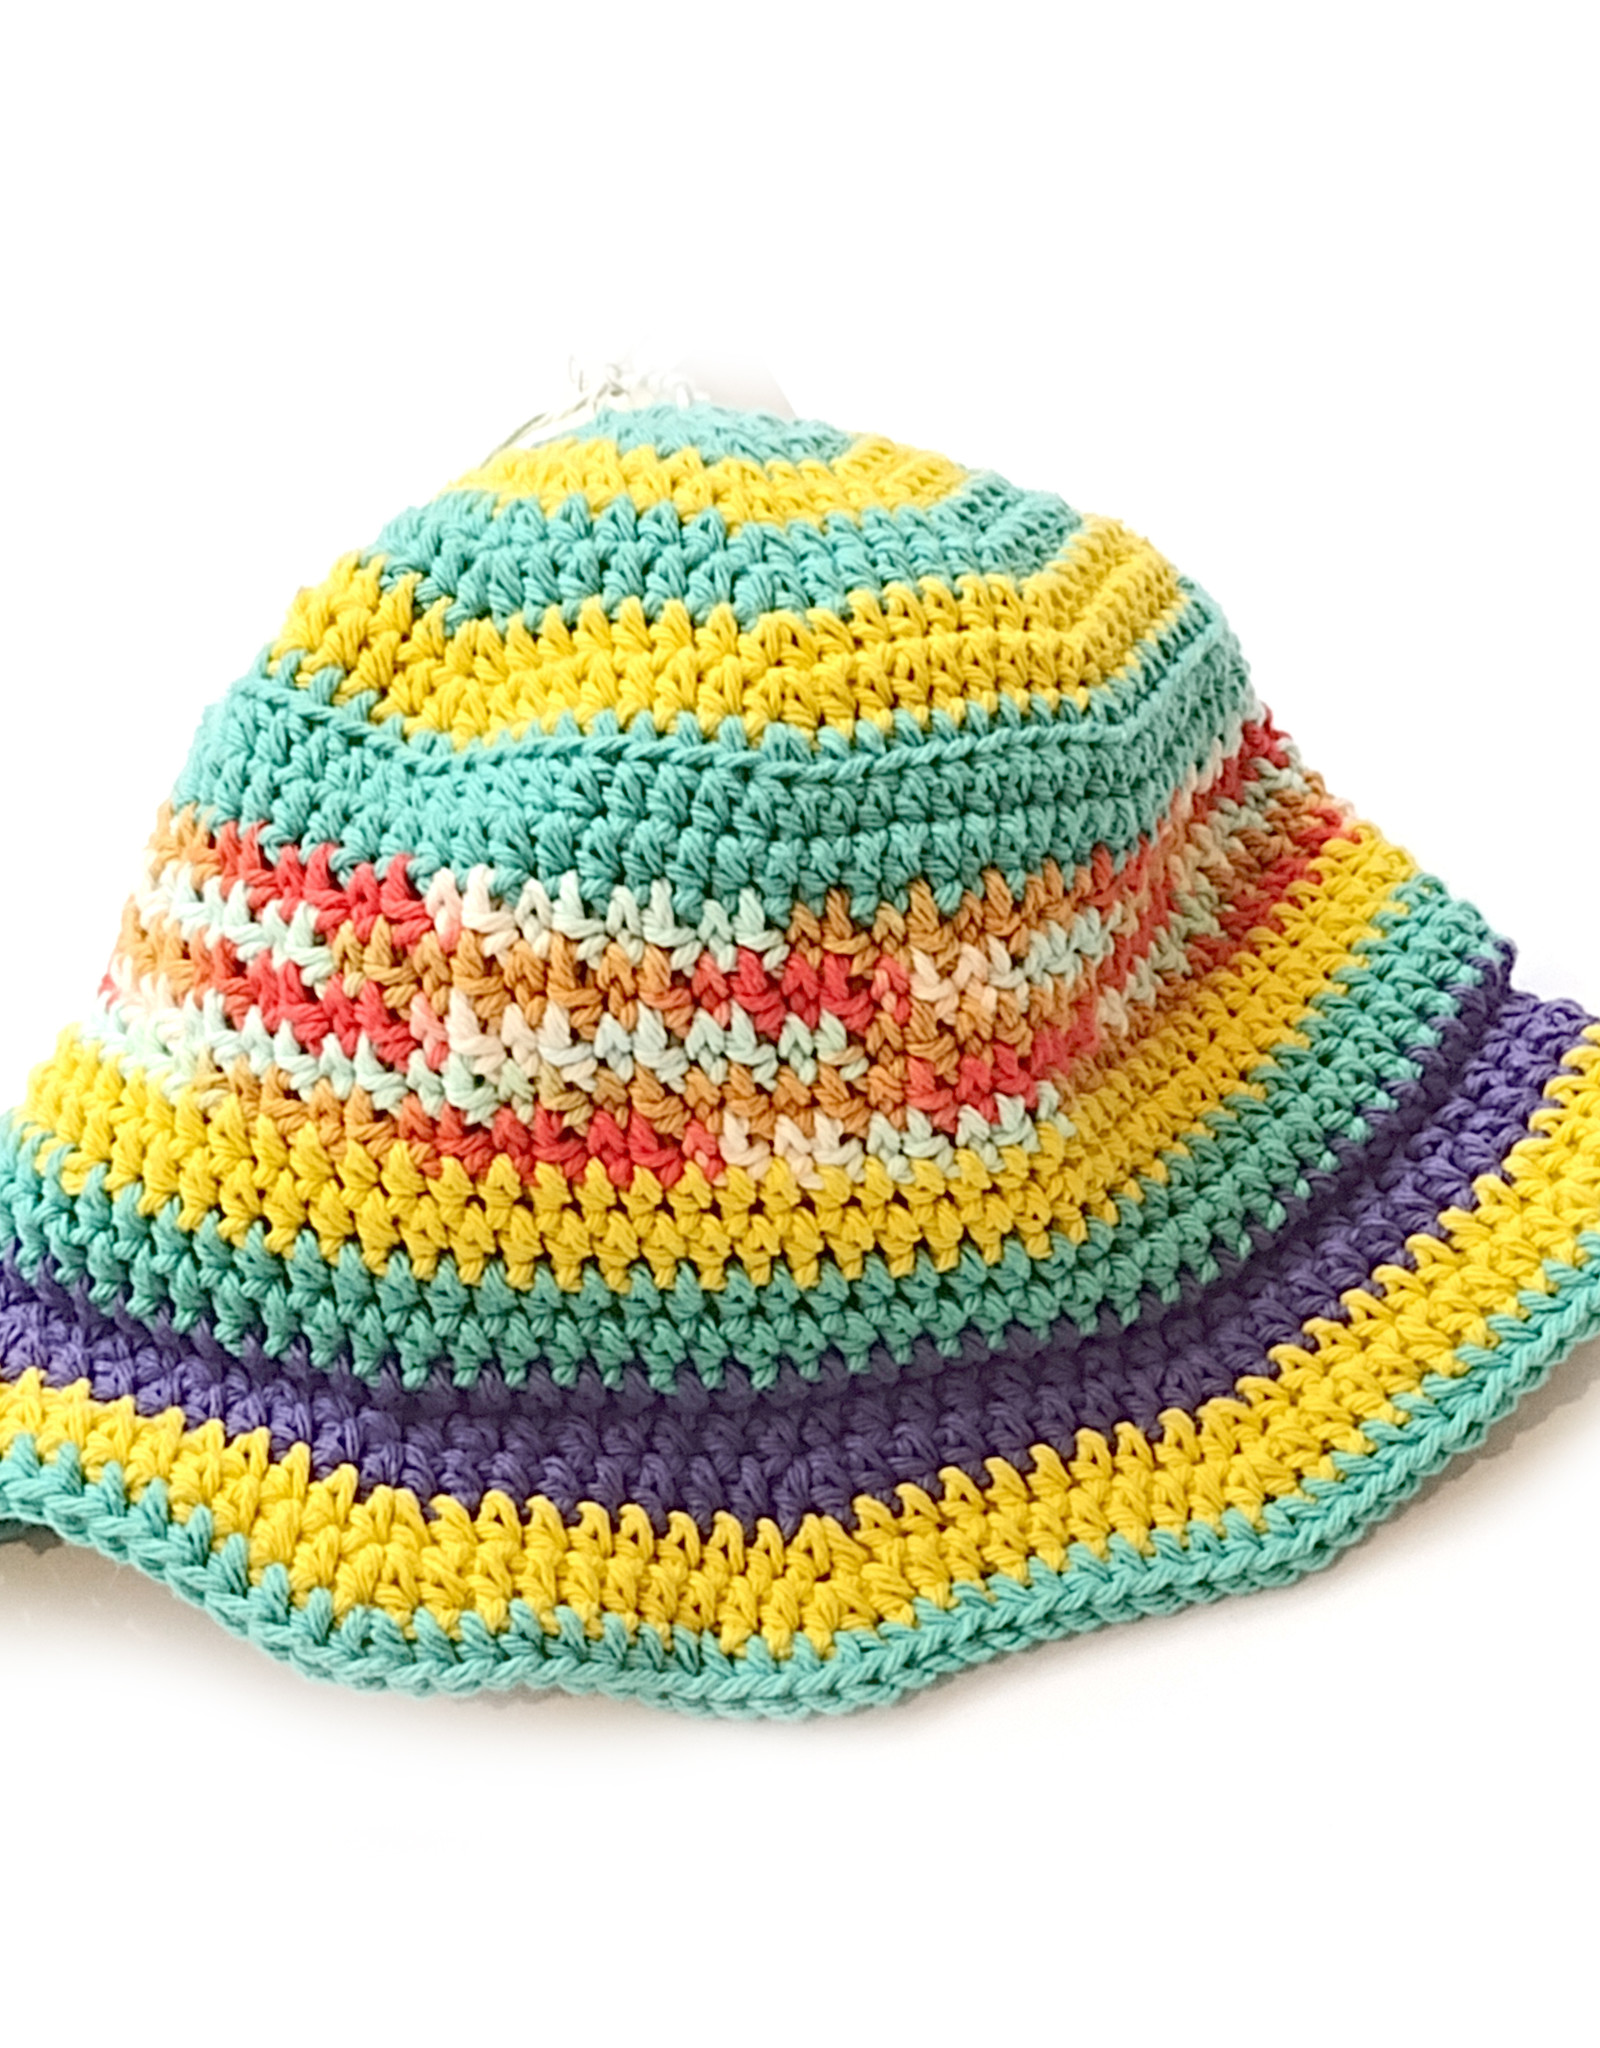 Crochet By Shelby Multicolored Crochet Bucket Hat by Shelby Olson